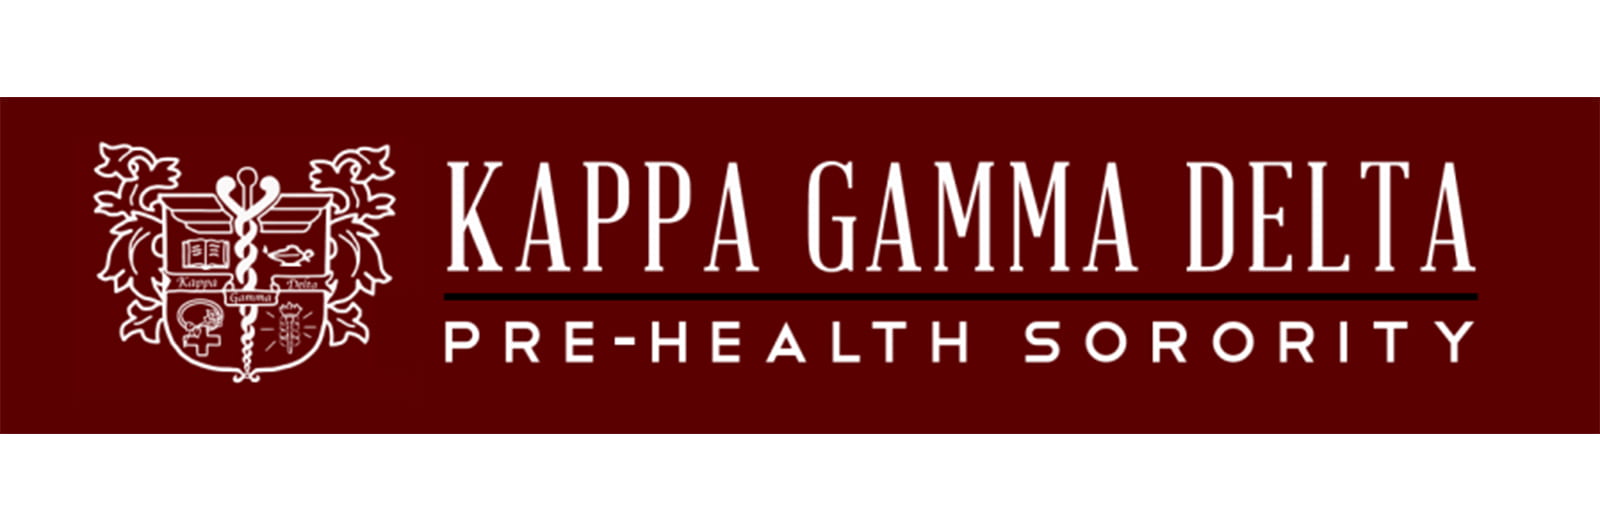 Banner reads "Kappa gamma delta pre-health sorority"